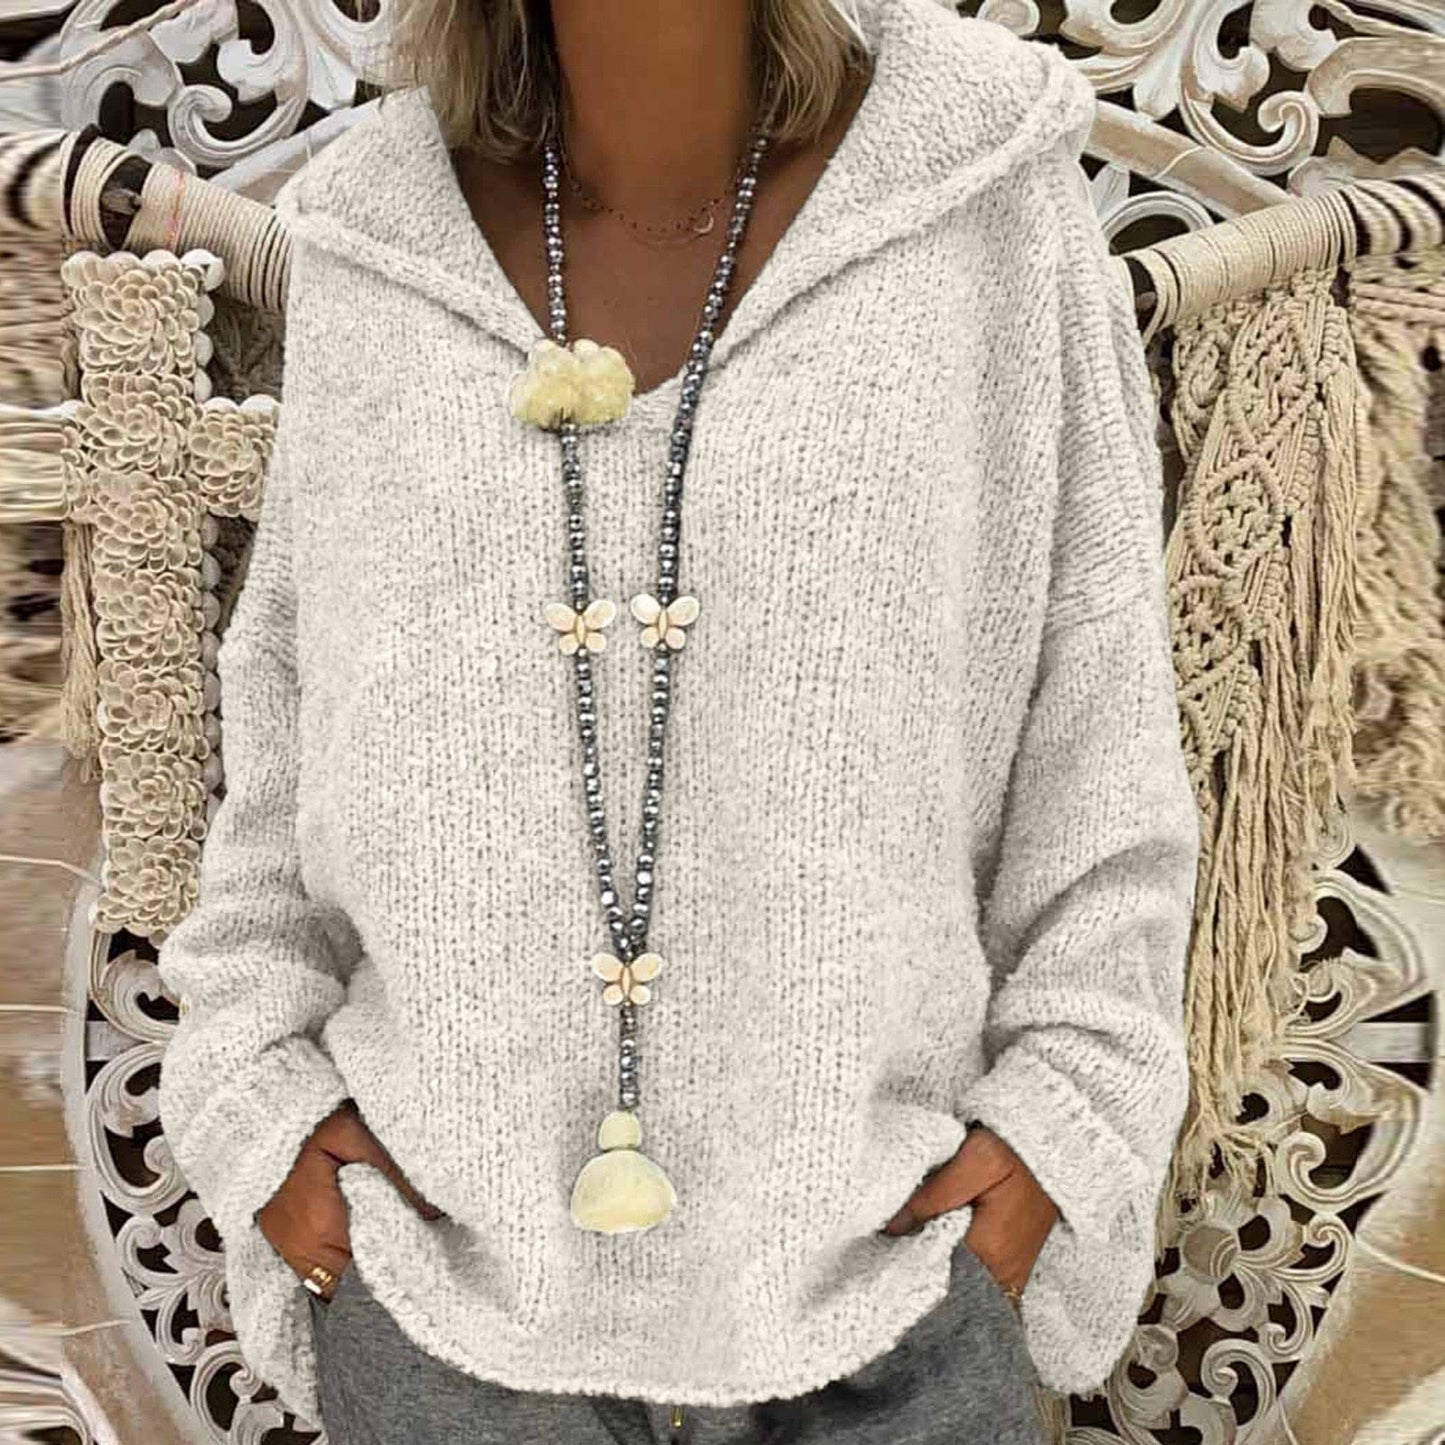 Fashion Knitted Hooded Sweater Casual Winter Sweatshirt Pullover Tops Ladies Female Streetwear Women Long Sleeve Blusas Jumper - RB.